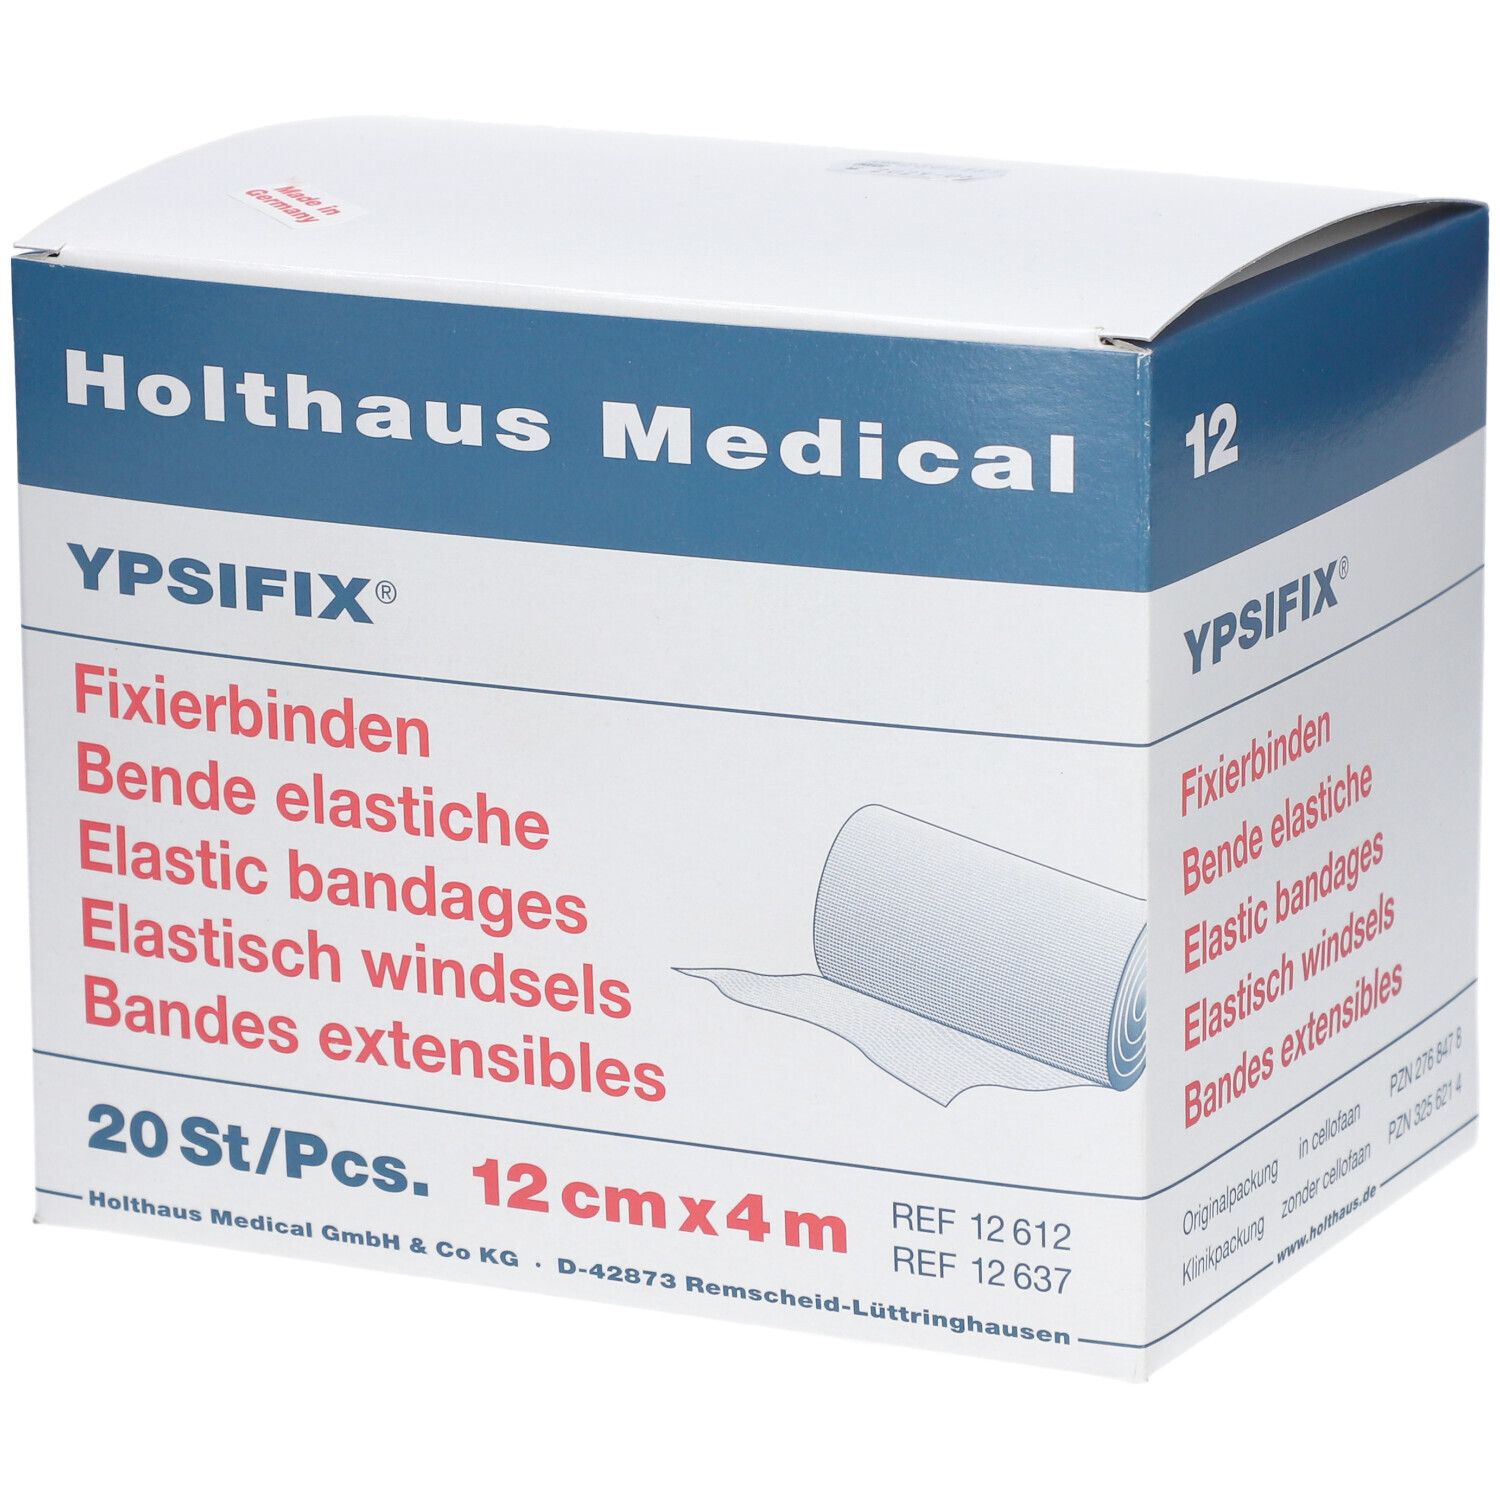 Holthaus Medical Ypsifix Fixierbinden 4 m x 12 cm, 20-fädig, lose